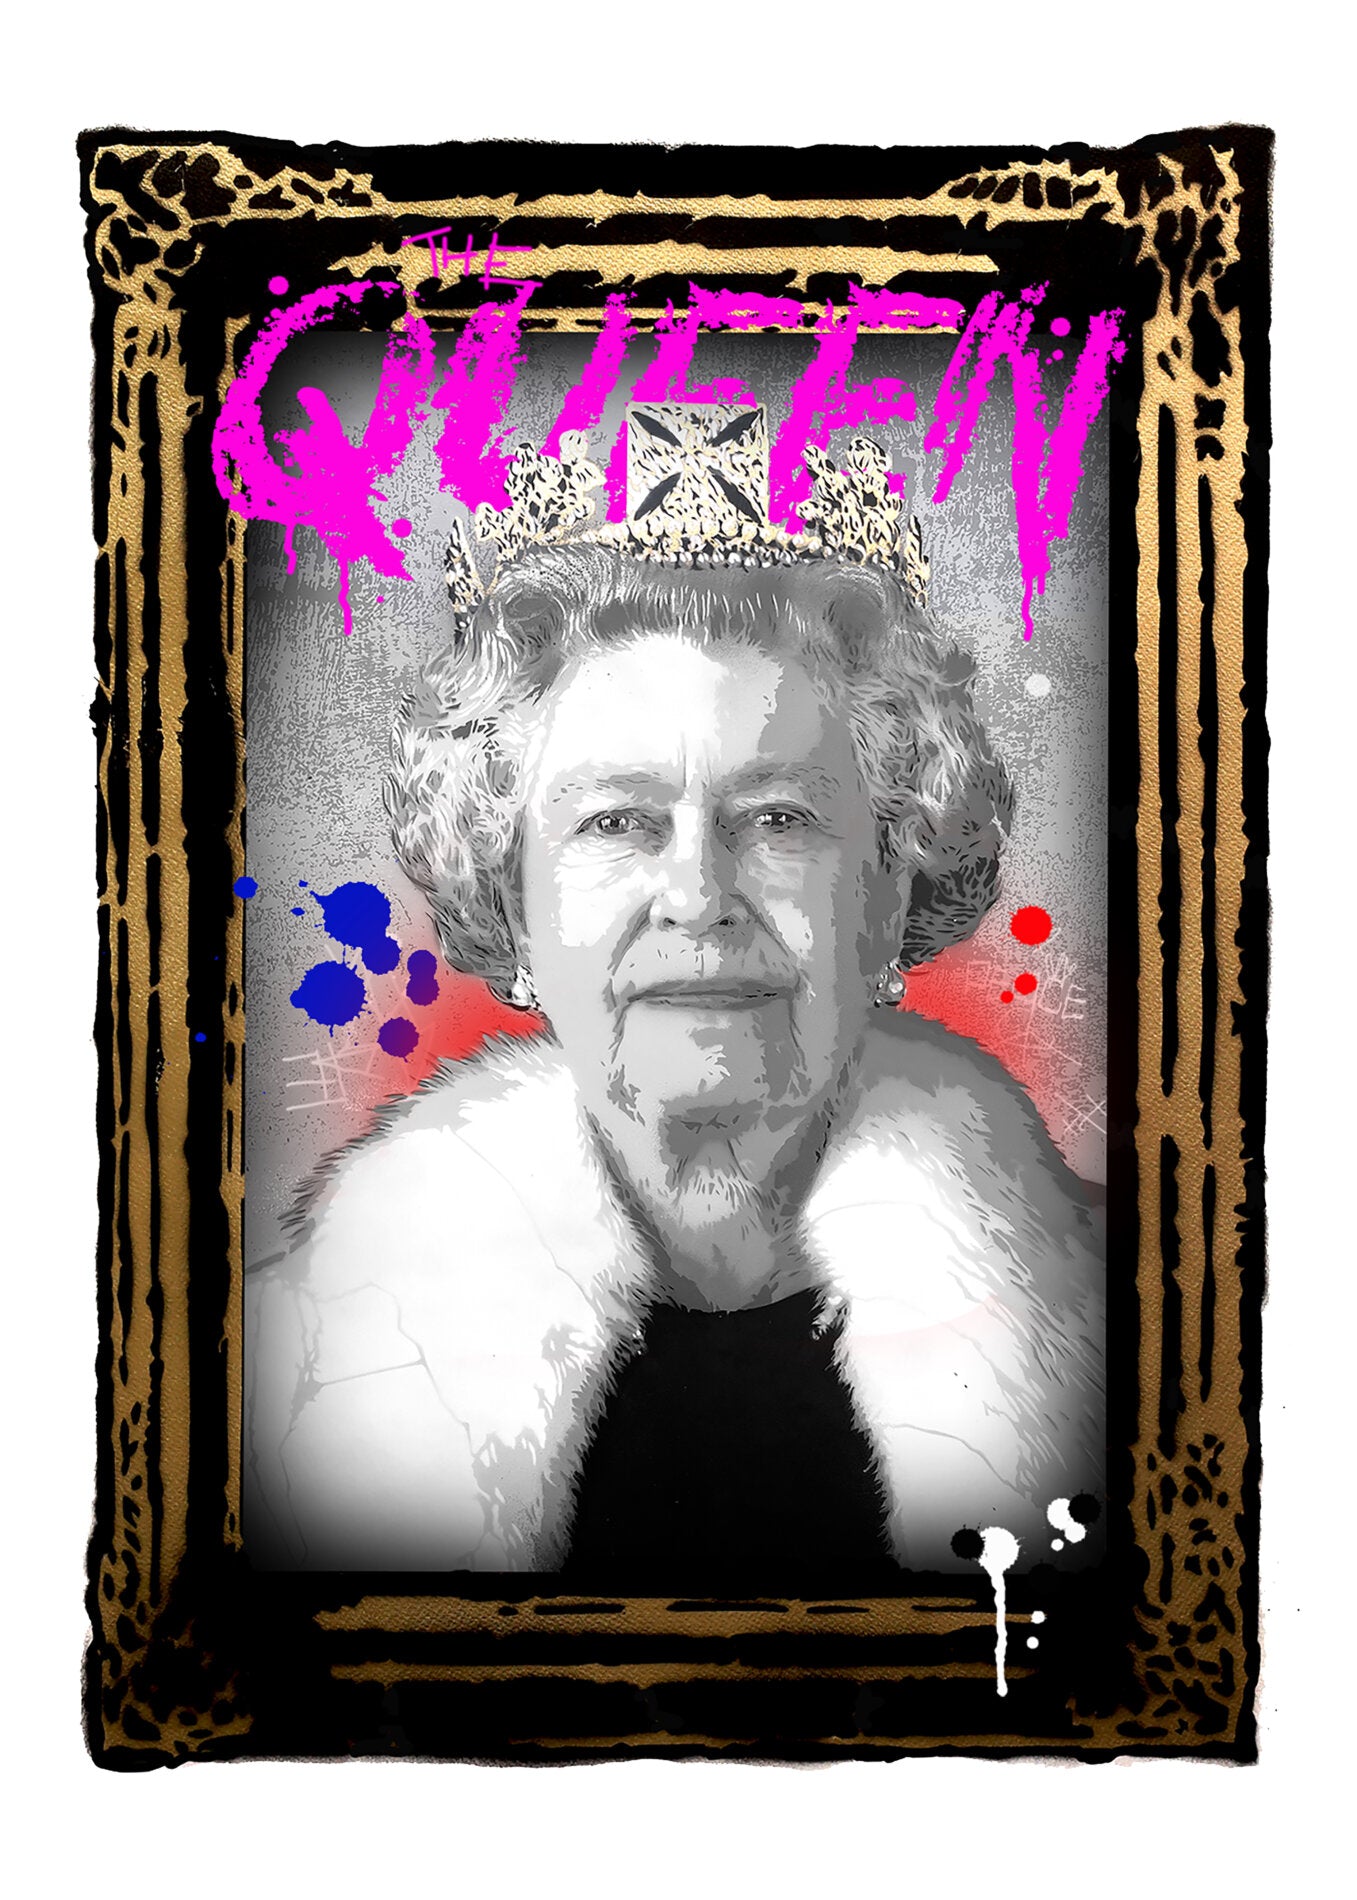 The Queen Frame di Alessio-B. Stampa giclée stampa su carta 320 gsm edizione limitata rappresentante la regina Elisabetta in chiave divertente | Cd Studio d'Arte